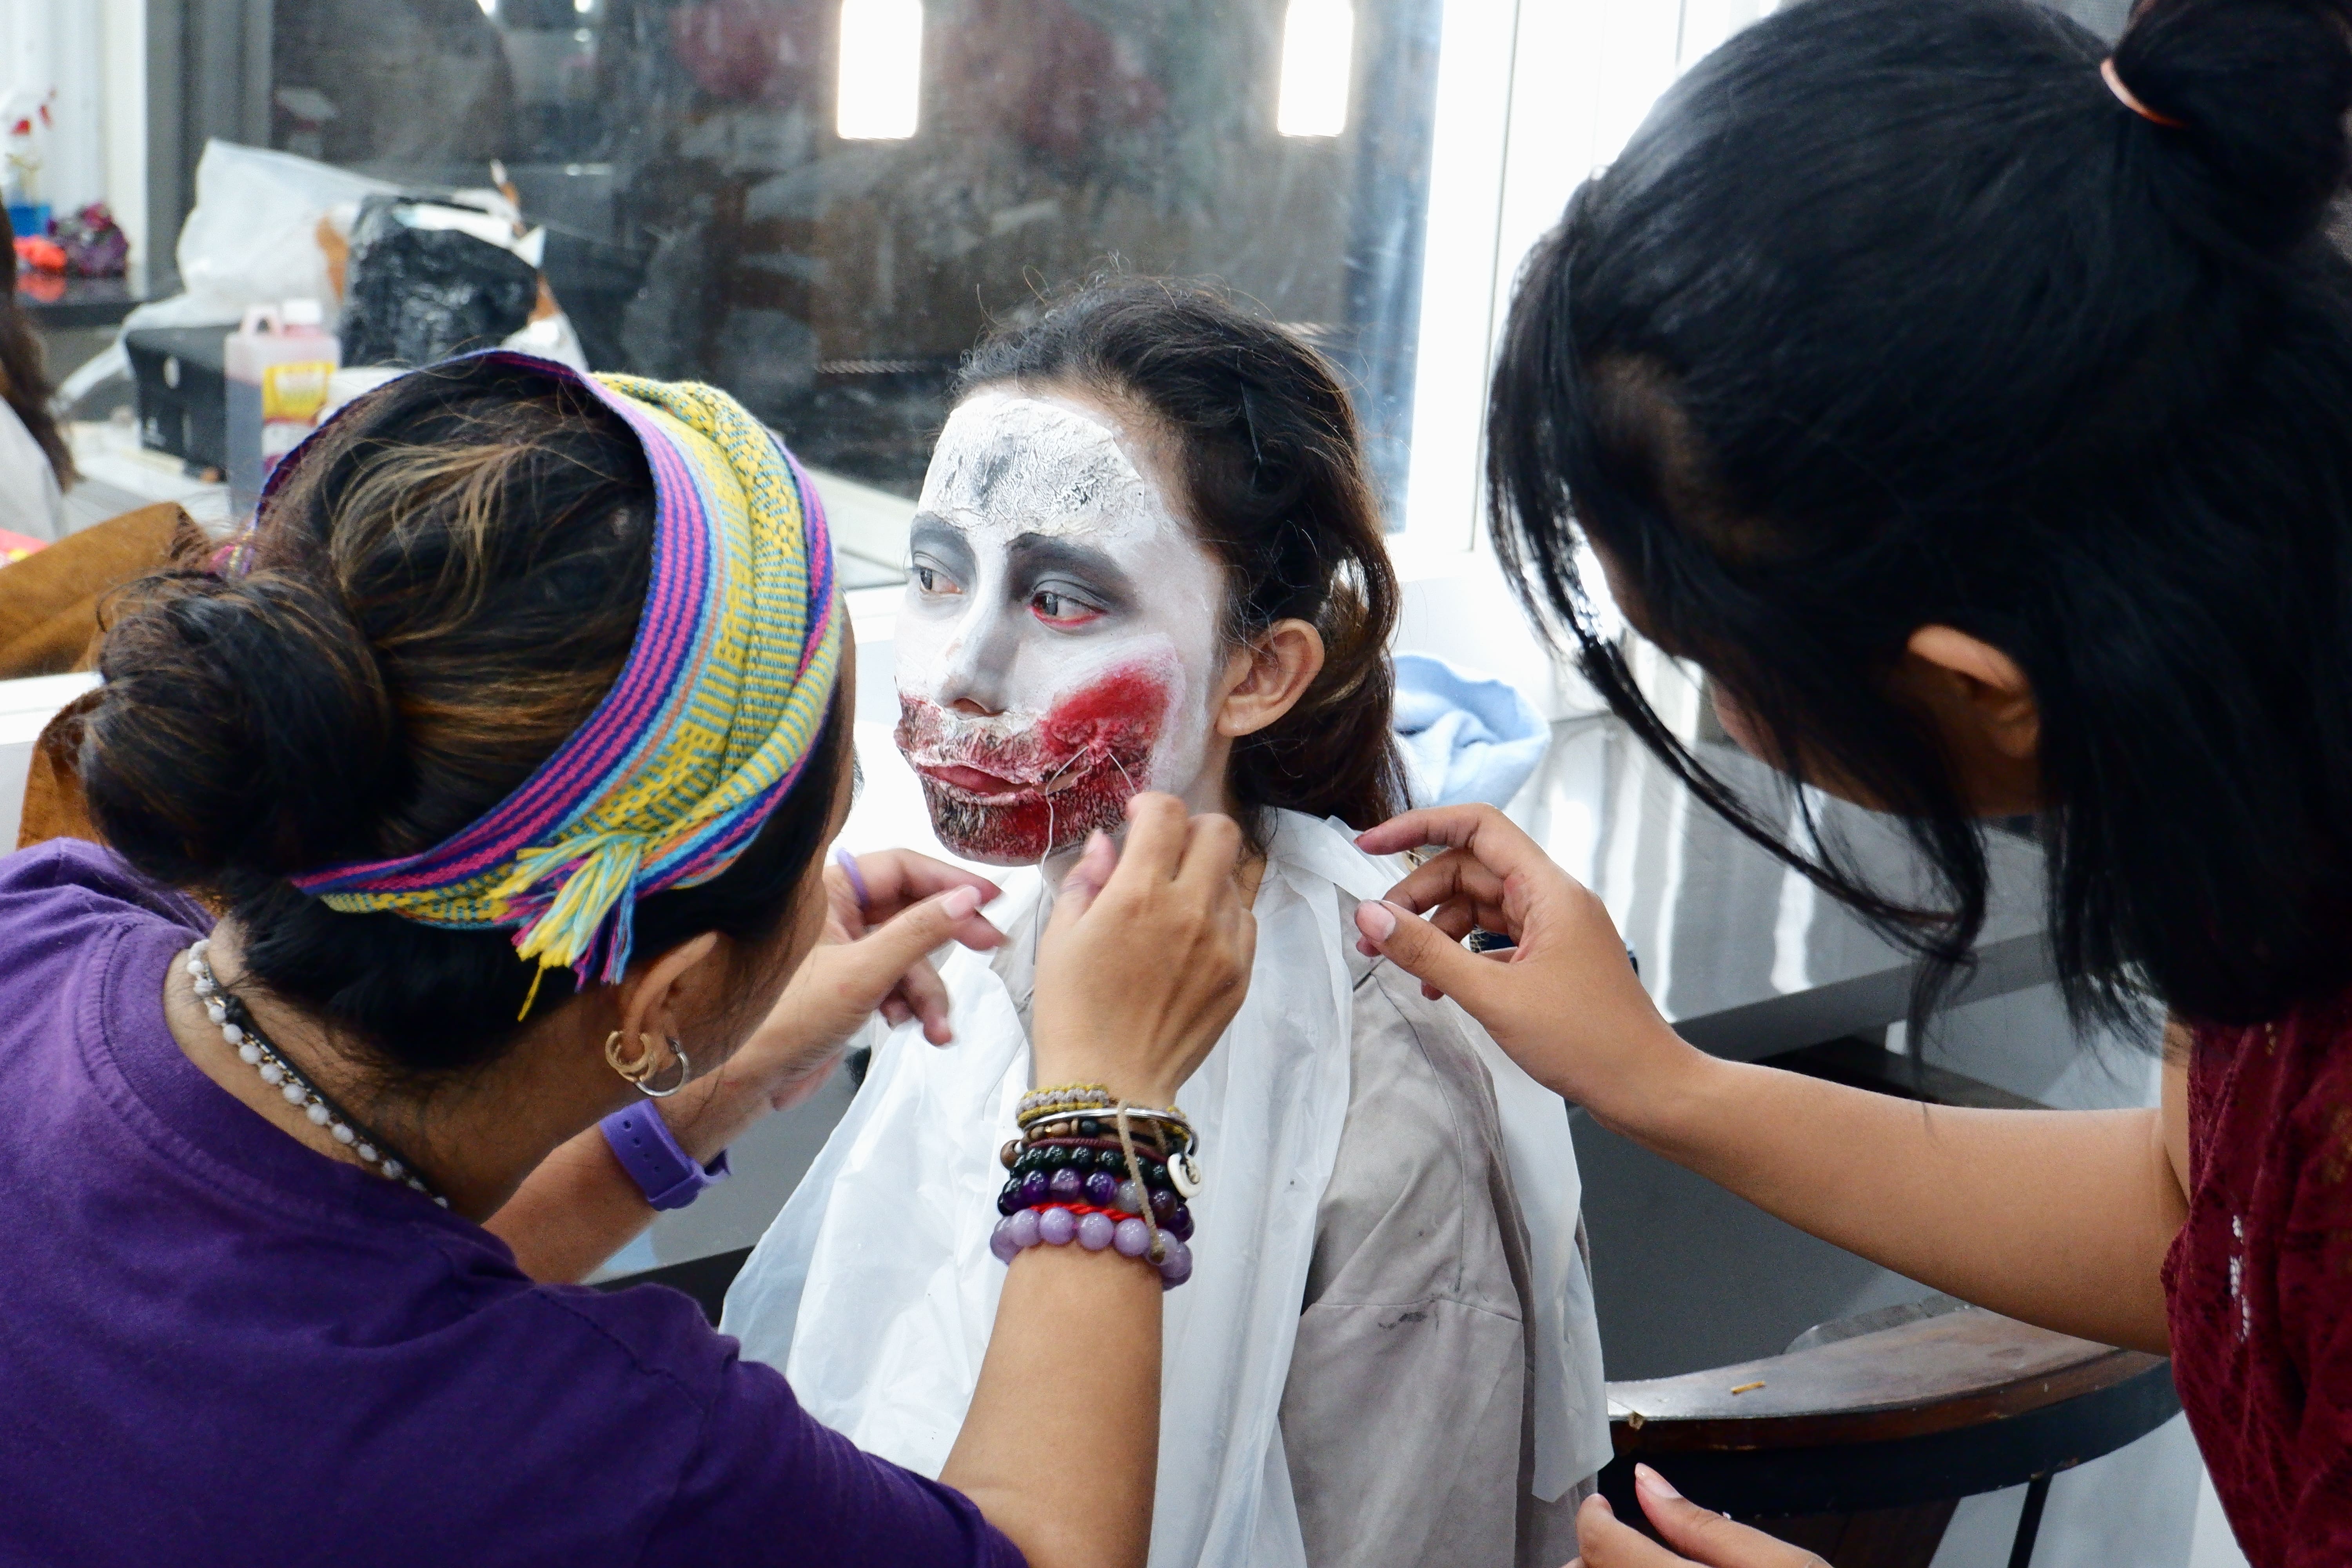 Metode Make-Up SPX untuk Halloween Ciptakan Karakter Zombie